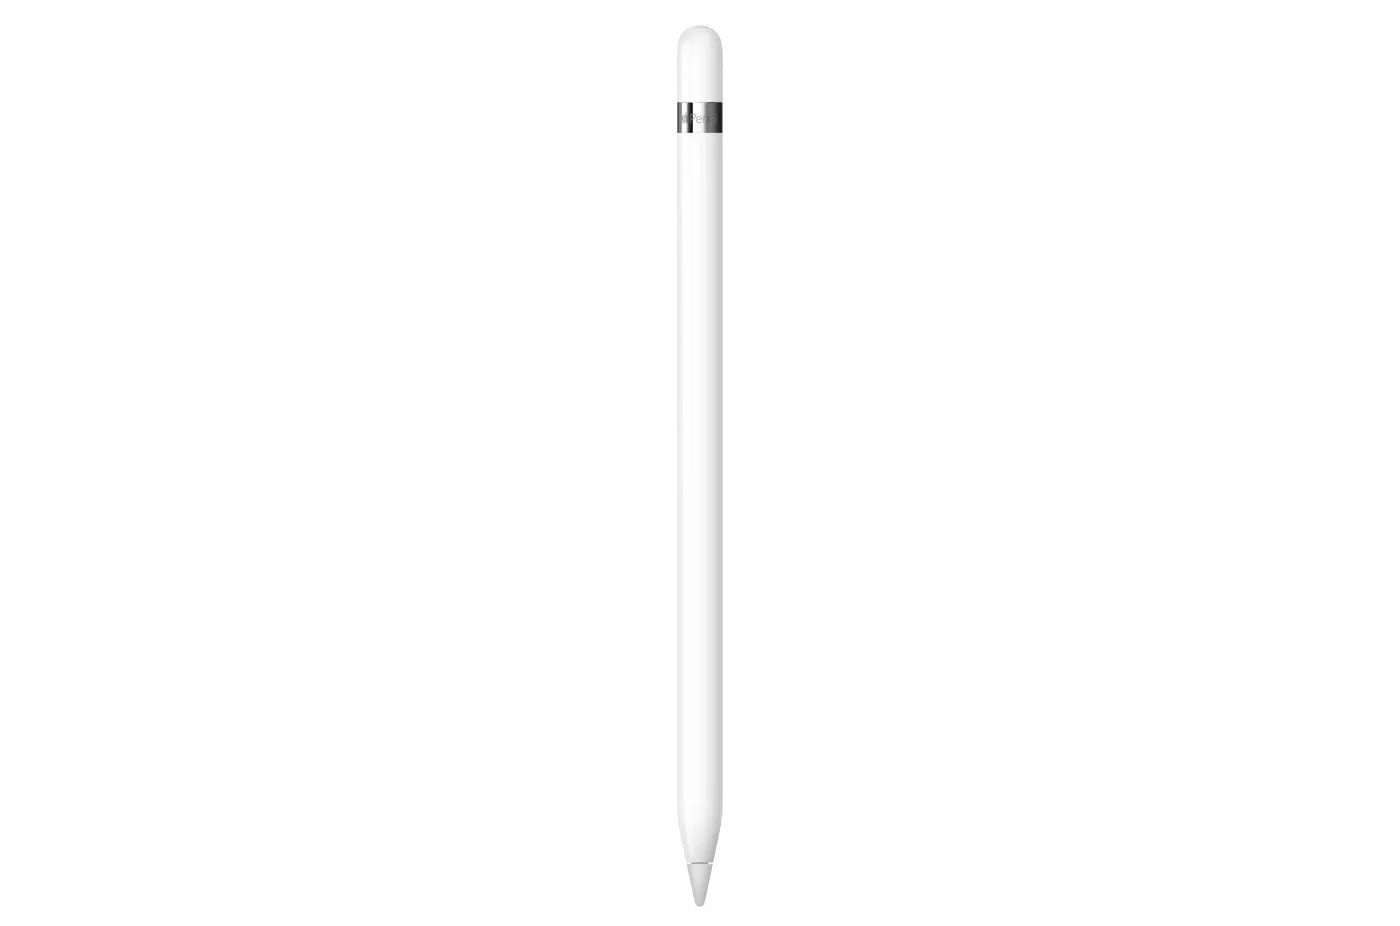 The white Apple Pencil